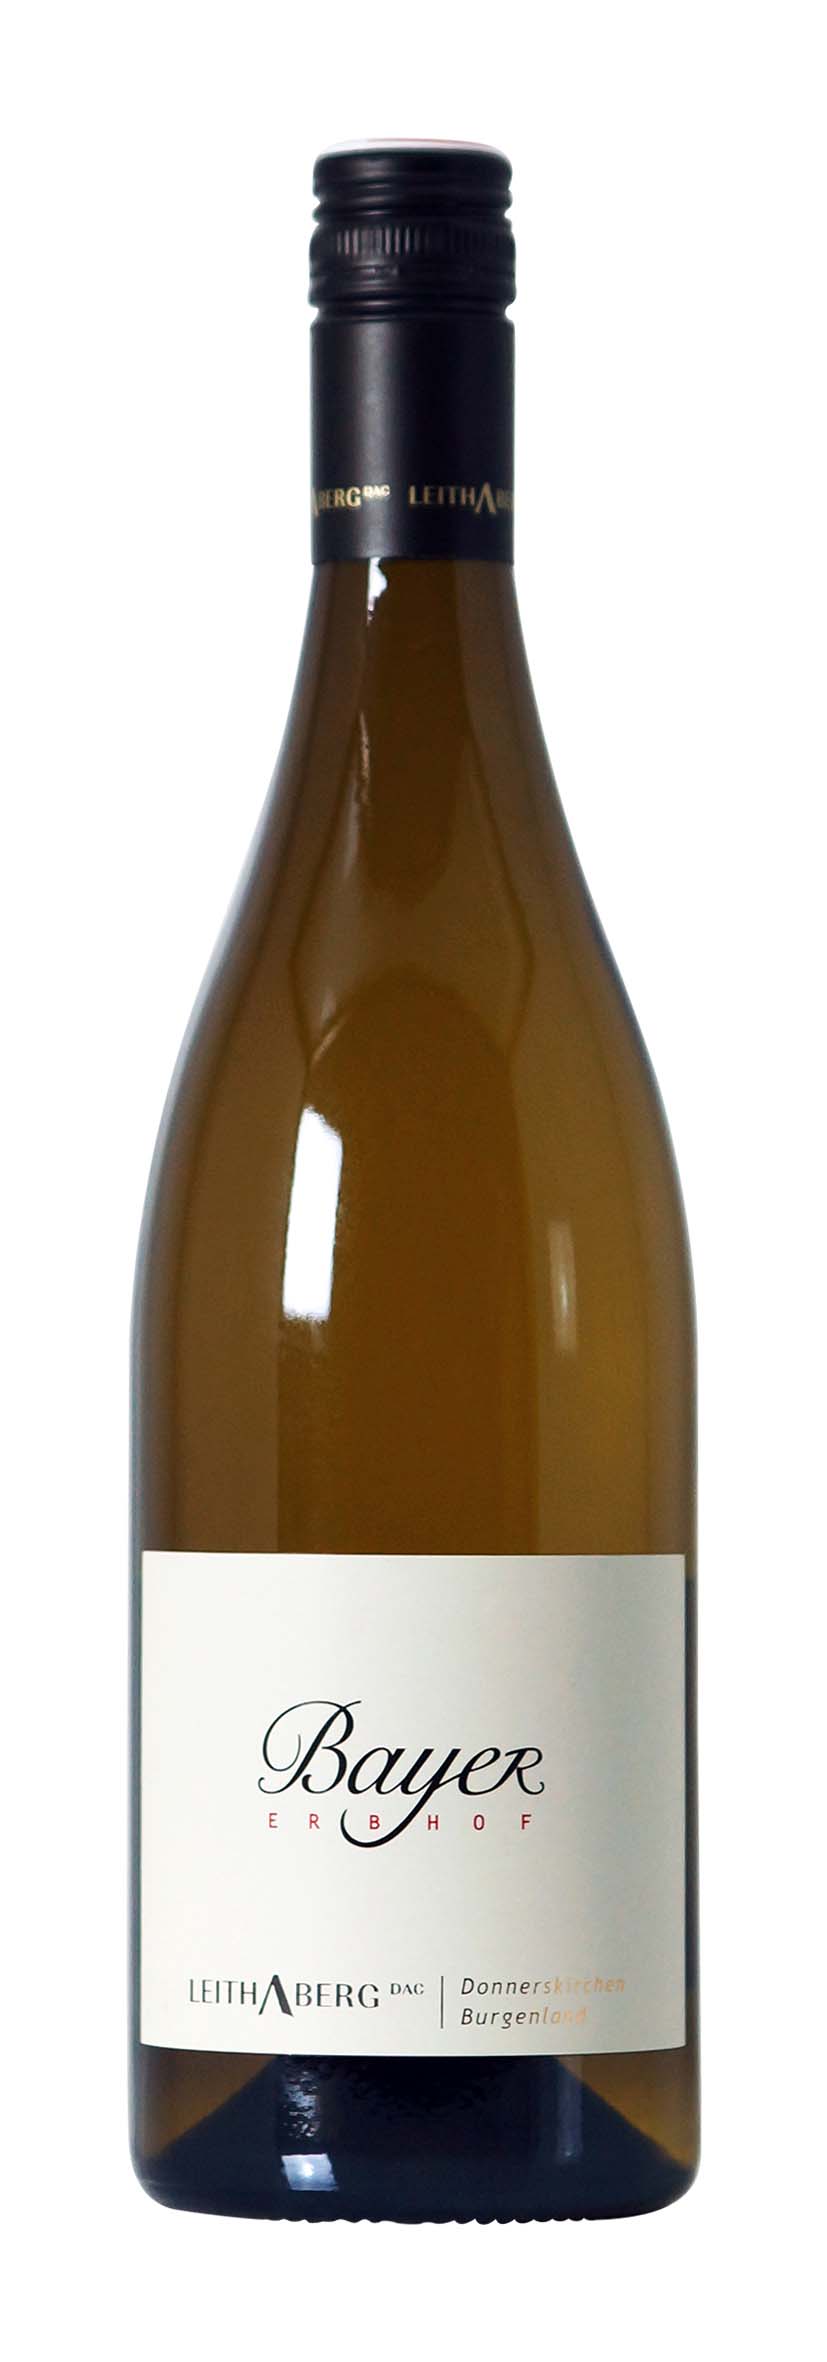 Leithaberg DAC Chardonnay 2012